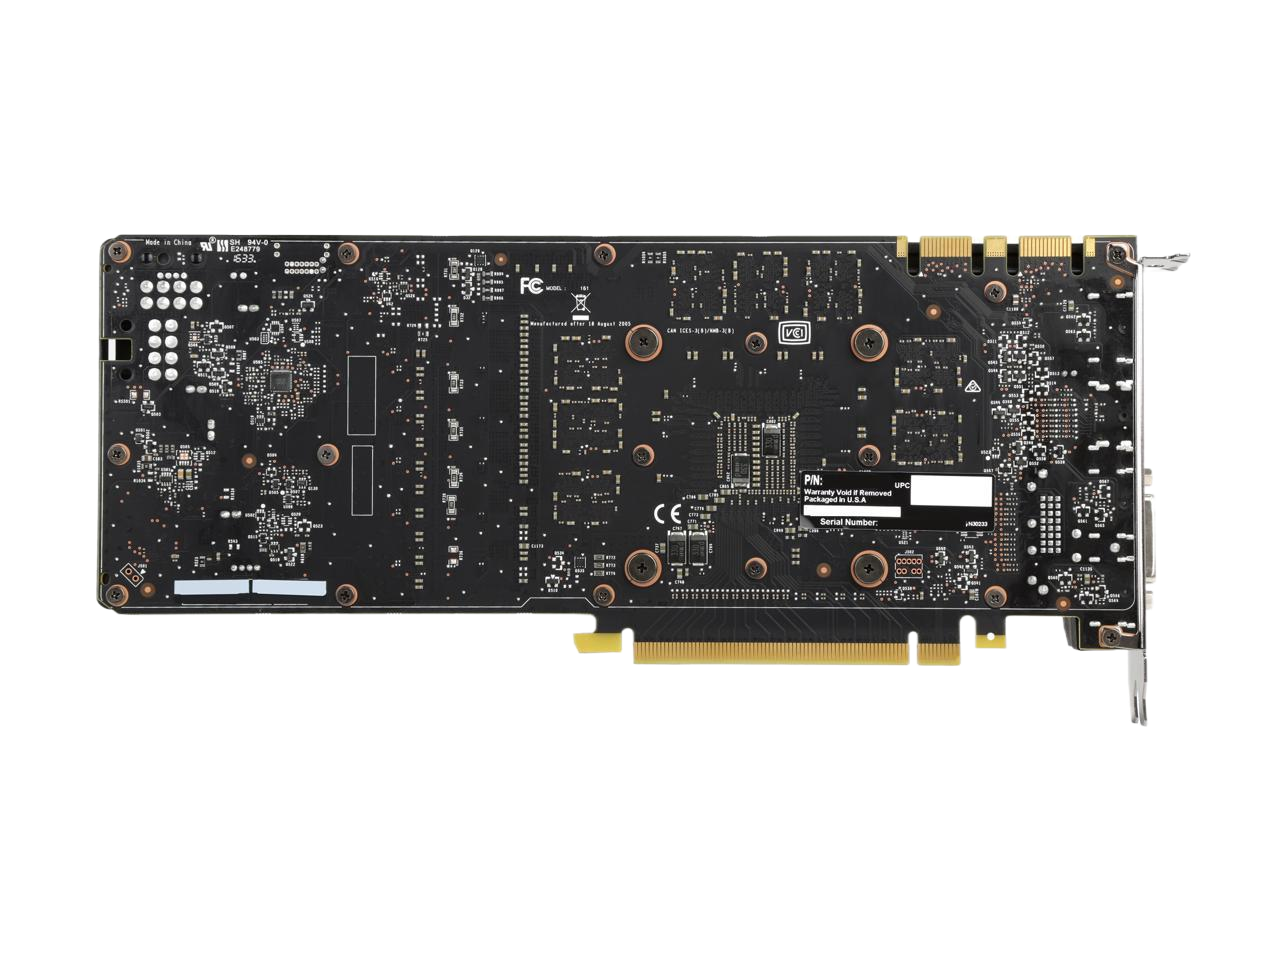 EVGA GeForce GTX 1080 8GB GDDR5X PCI Express 3.0 SLI Support GAMING Video Card 08G-P4-5180-KR